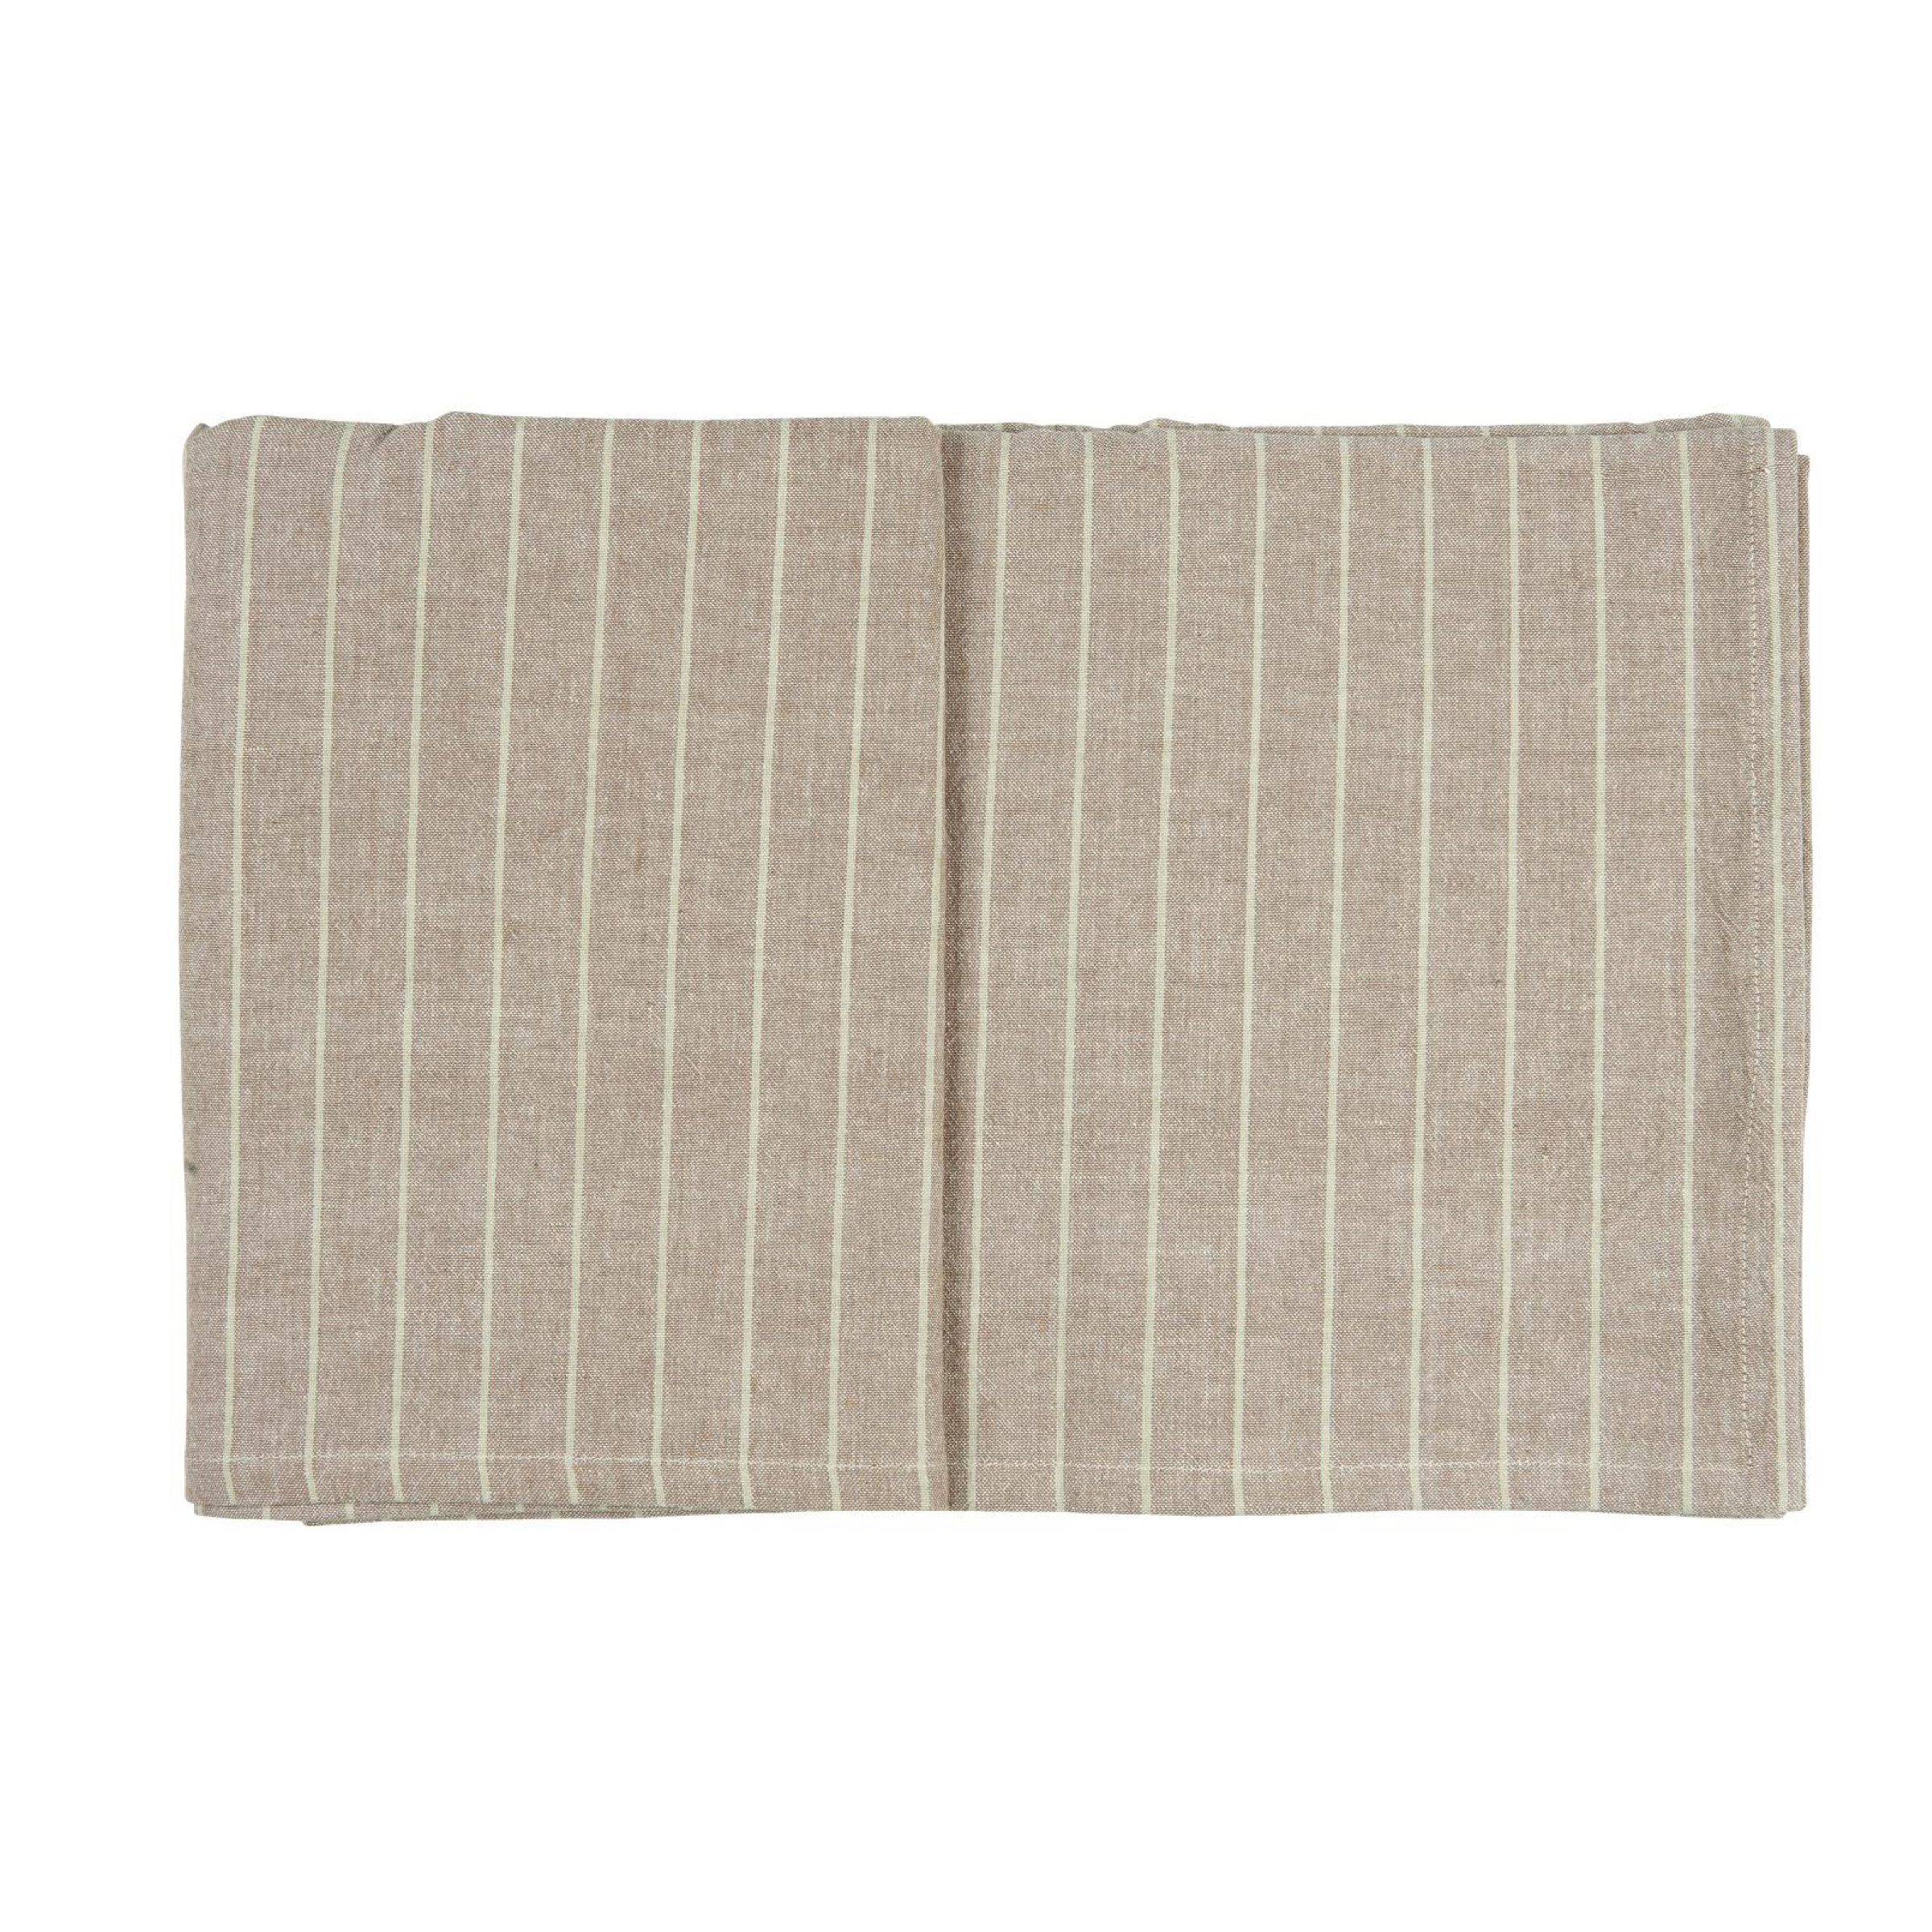 Ib Laursen Malva with Thin Beige Stripes Cotton Table Cloth